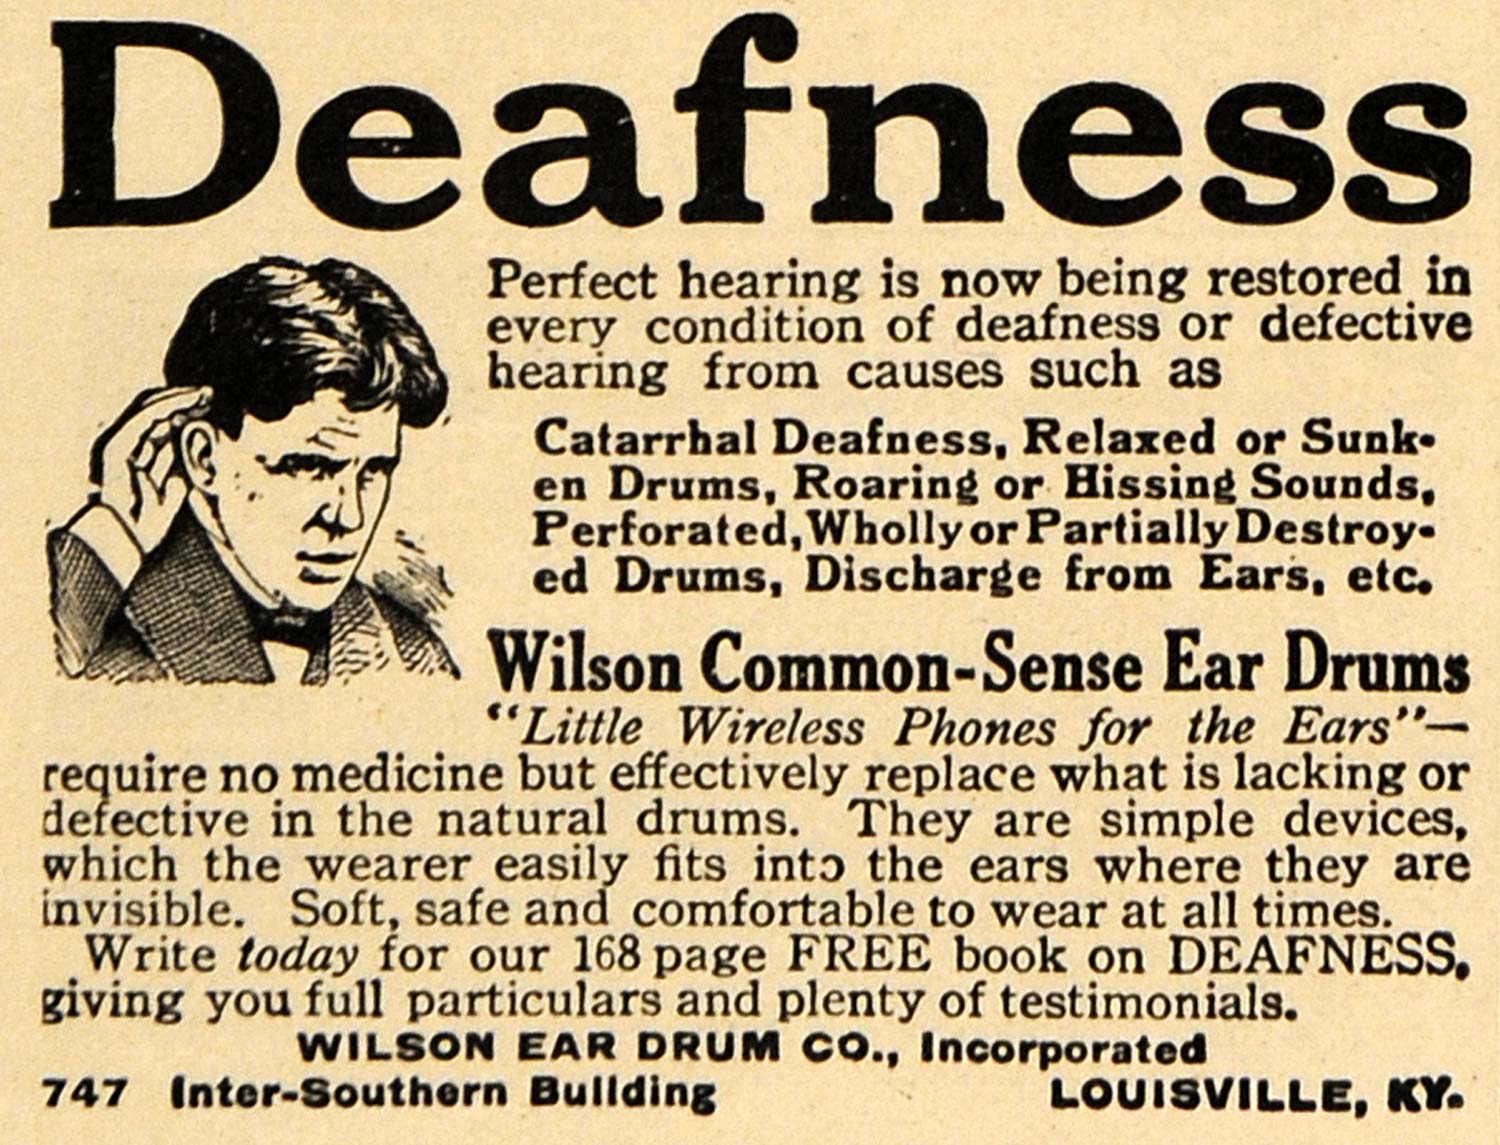 1923 Ad Wilson Common-Sense Ear Drums Deafness Cured - ORIGINAL ADVERTISING ILW1